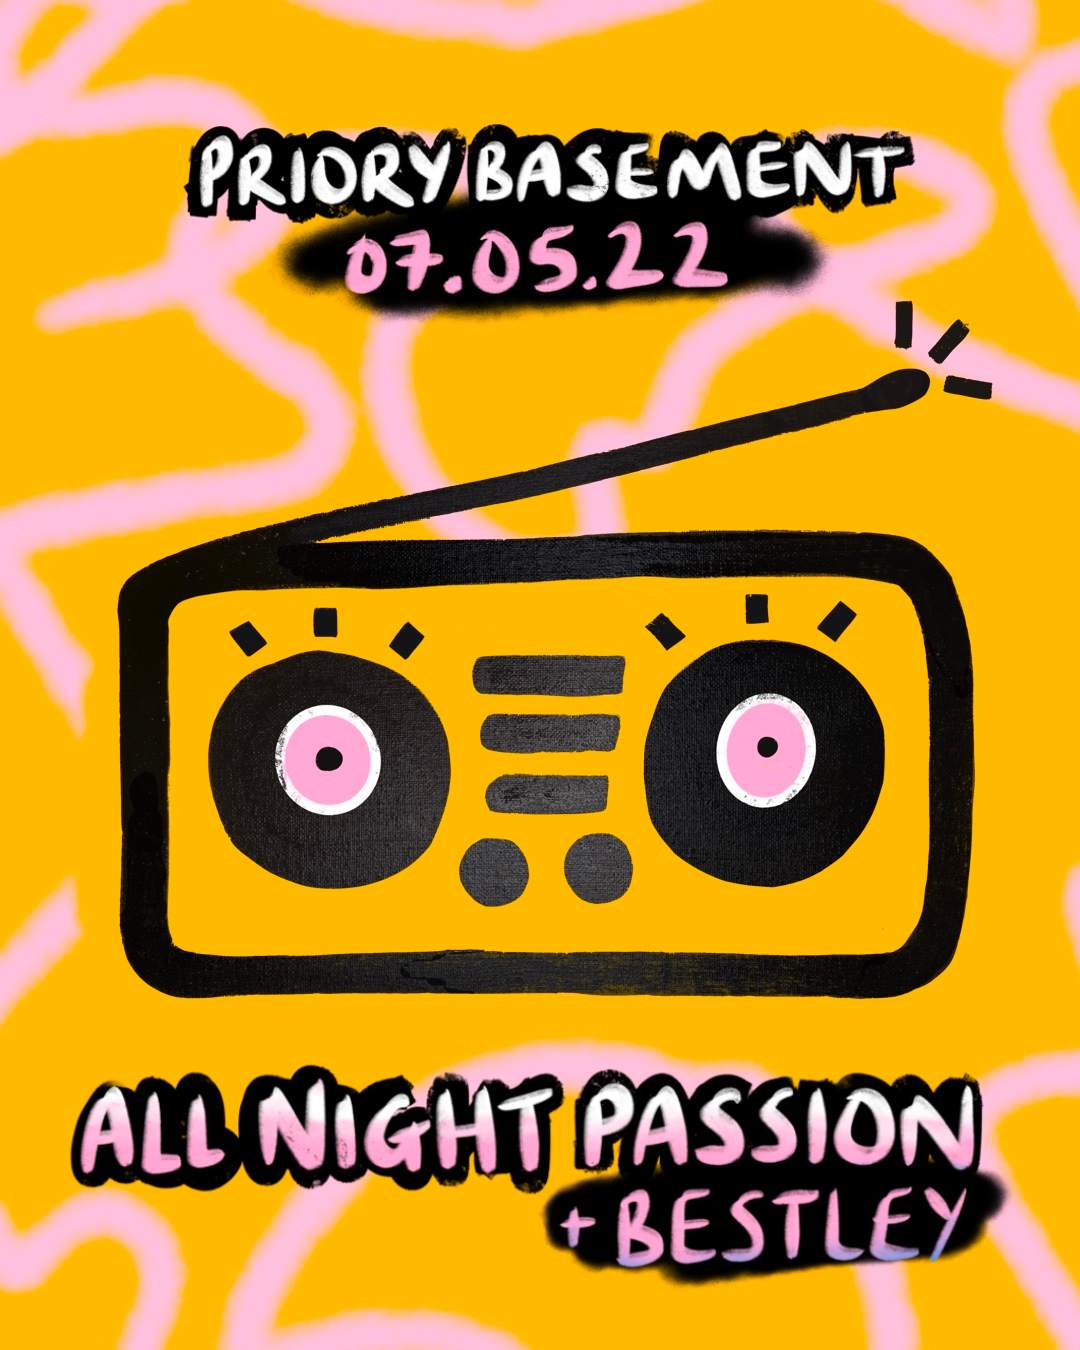 All Night Passion + Bestley - フライヤー表